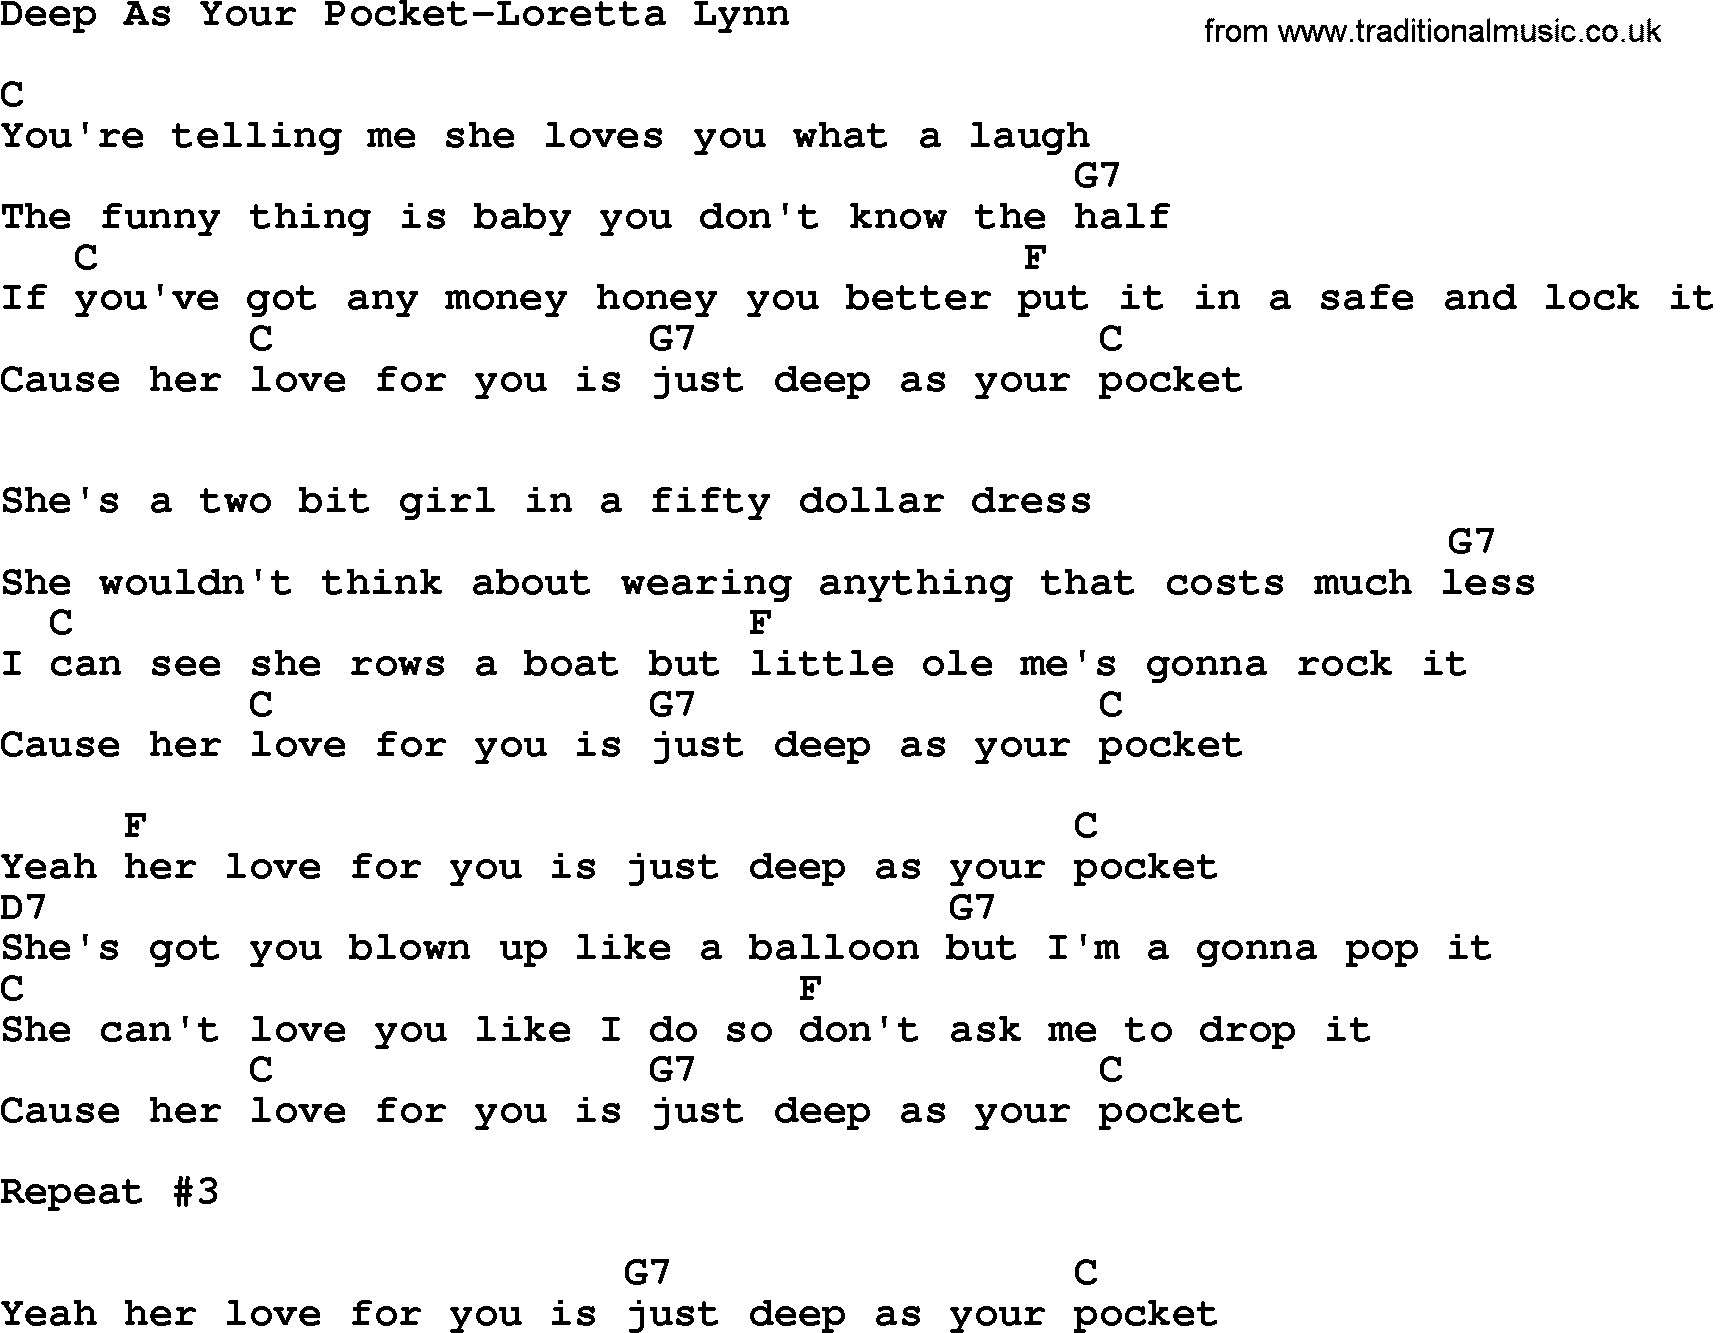 Country music song: Deep As Your Pocket-Loretta Lynn lyrics and chords